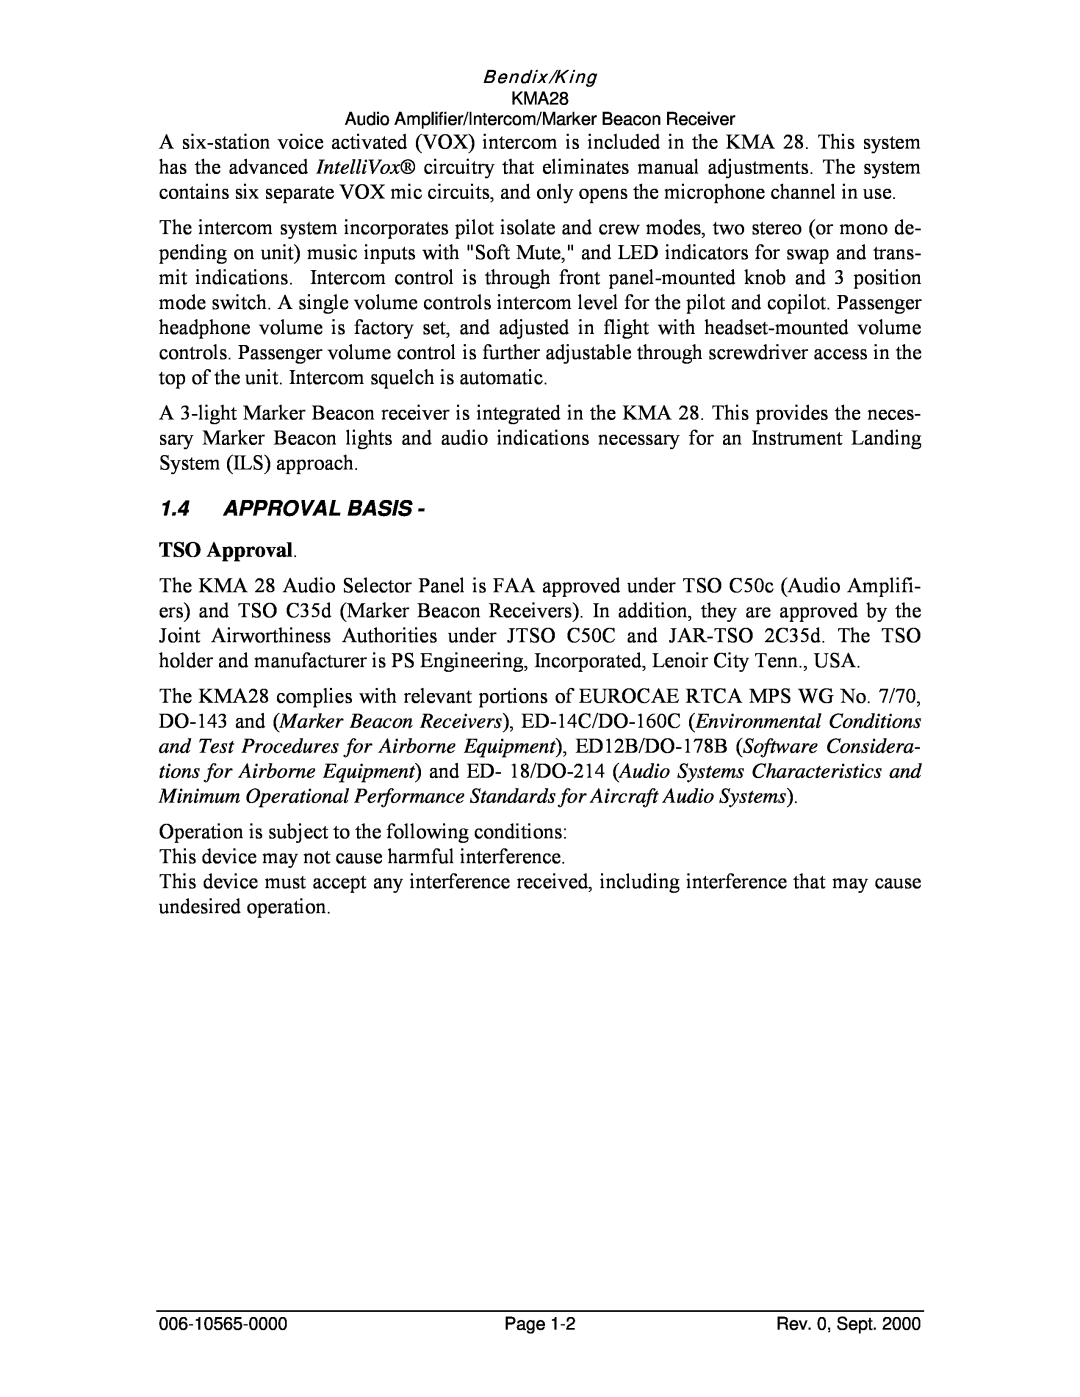 Honeywell KMA28 operation manual Approval Basis, TSO Approval 